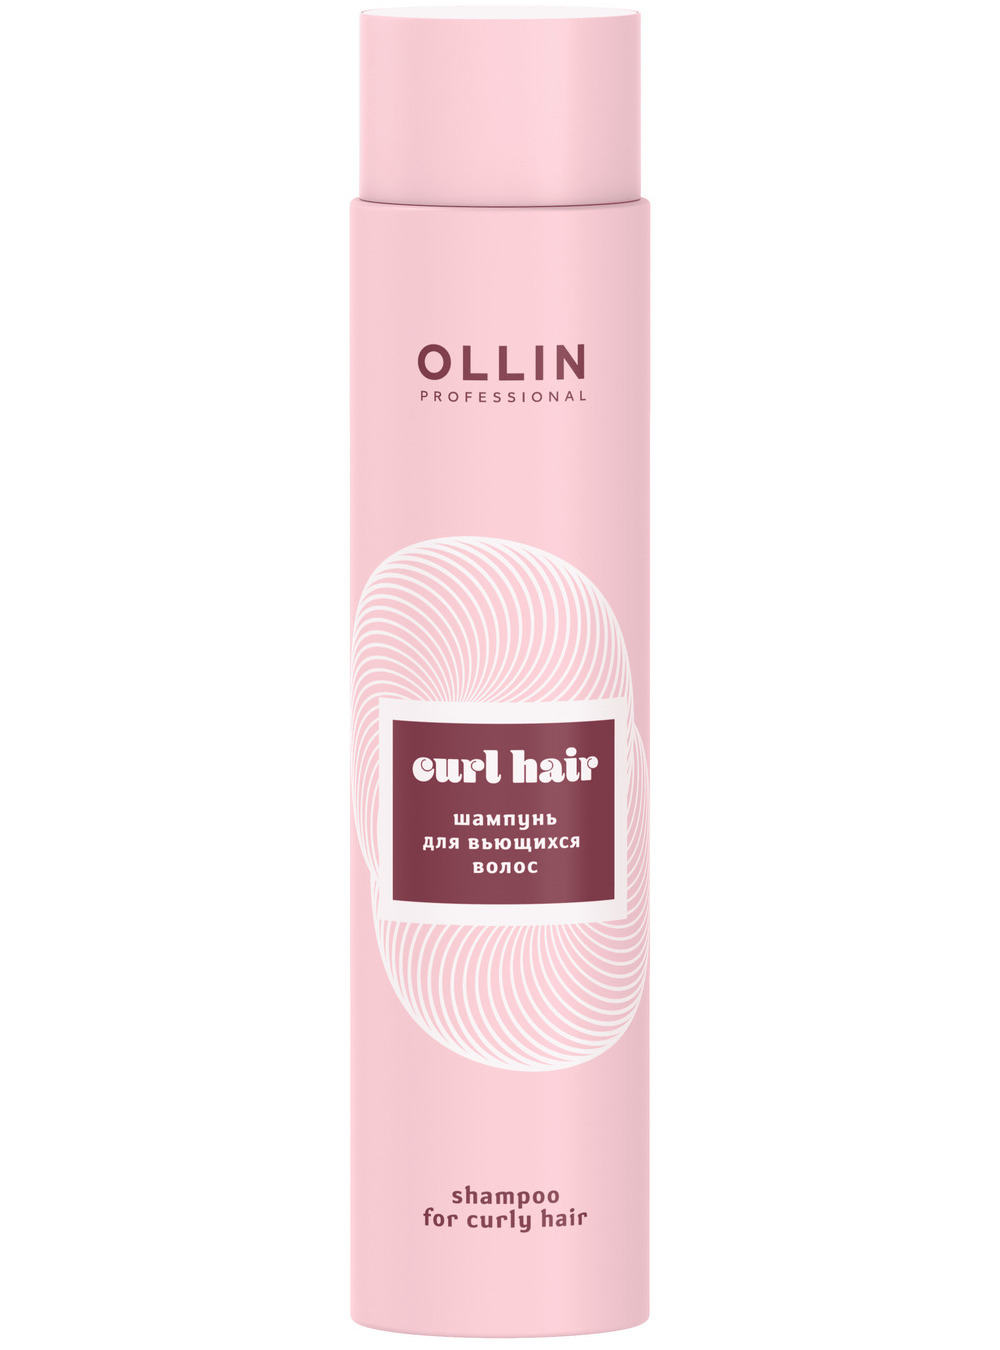 Ollin Professional Шампунь для вьющихся волос, 300 мл (Ollin